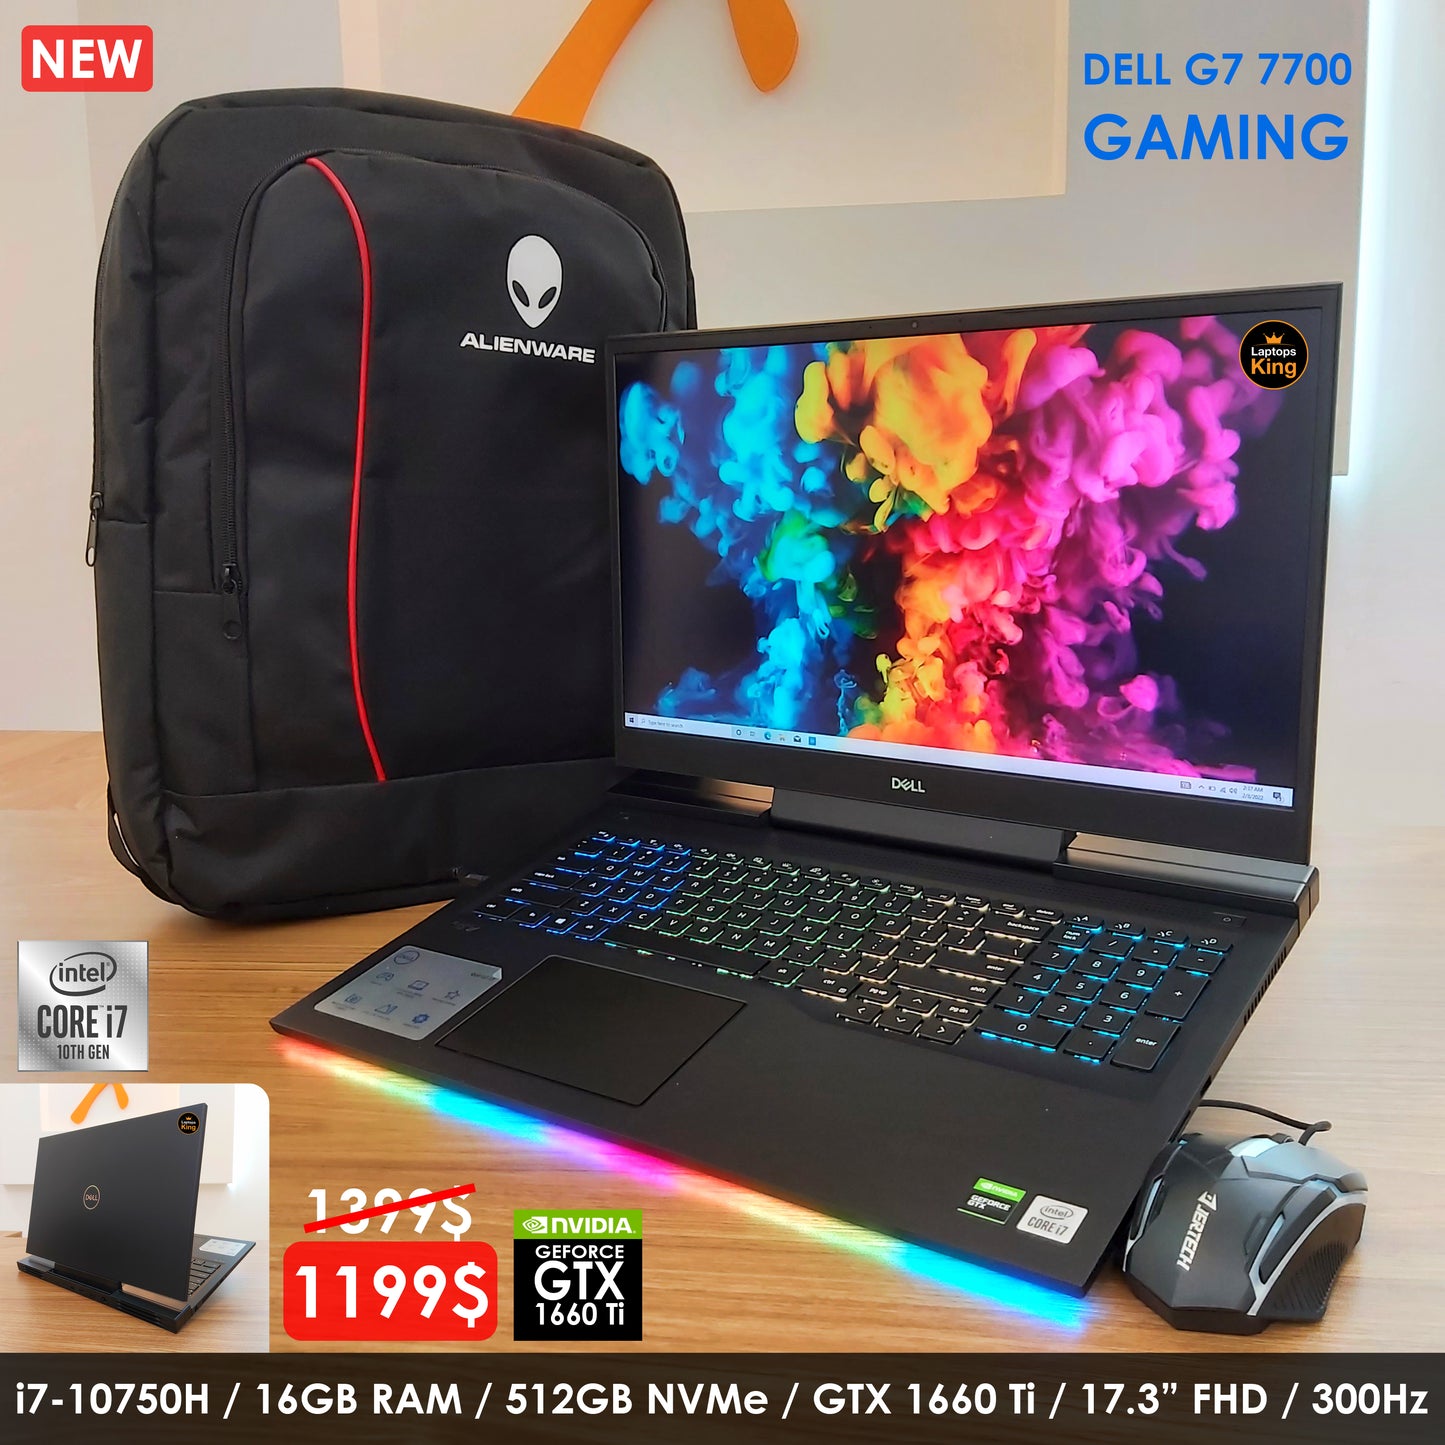 Dell G7 7700 GTX 1660 Ti 300hz i7-10750h 17.3" Gaming Laptop (Brand New)